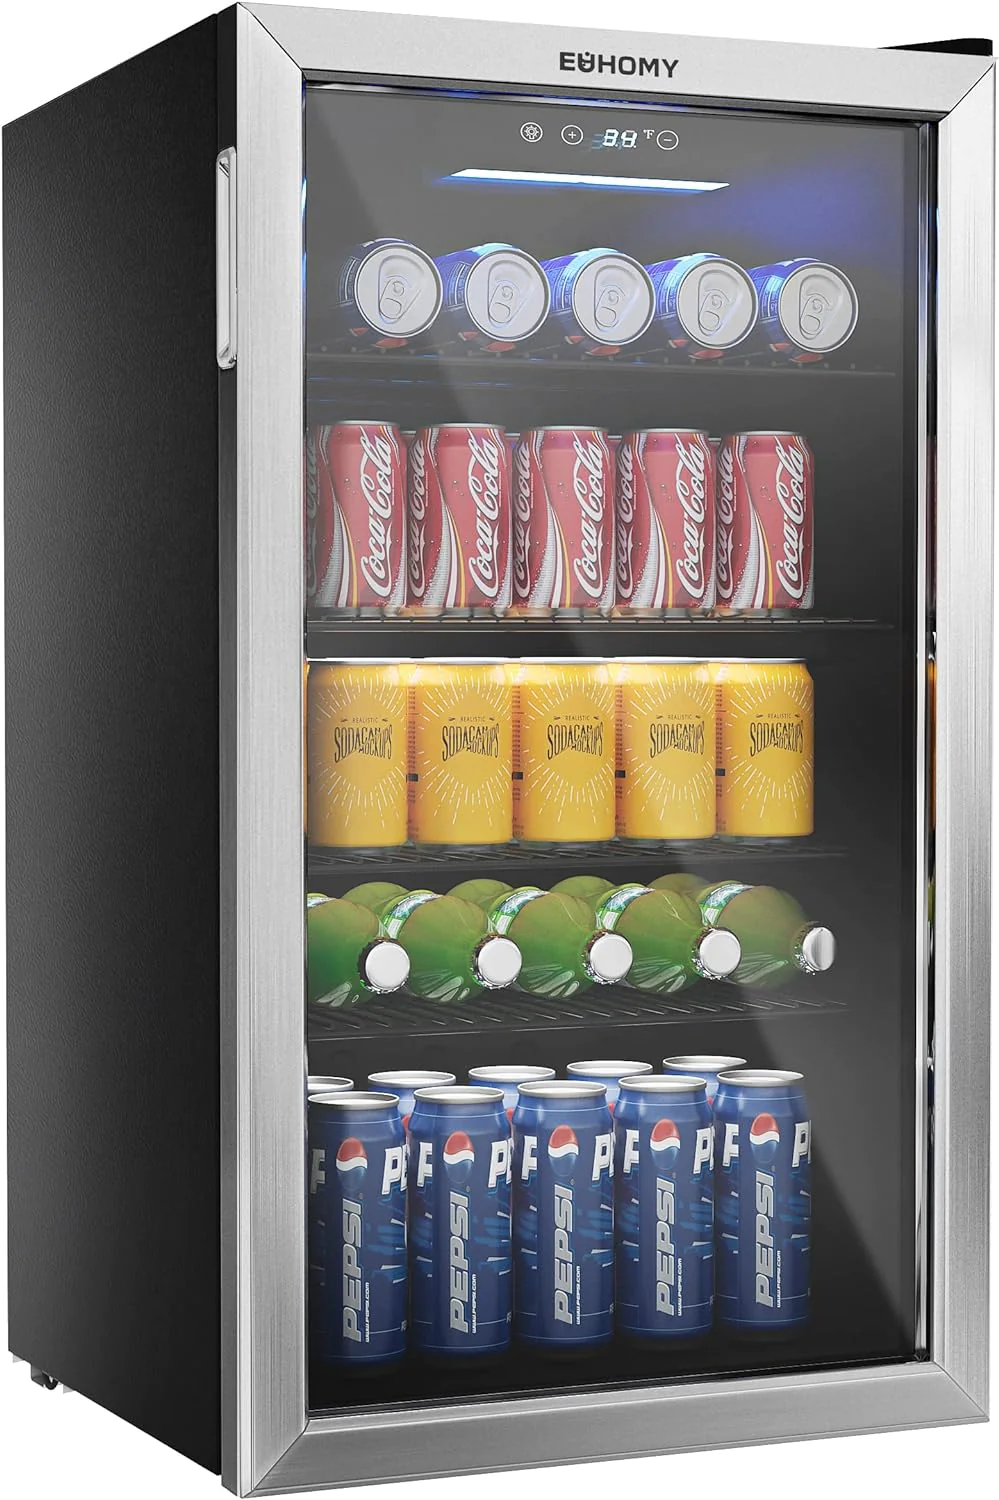 EUHOMY Beverage Refrigerator, 126 Can Mini fridge with Glass Door